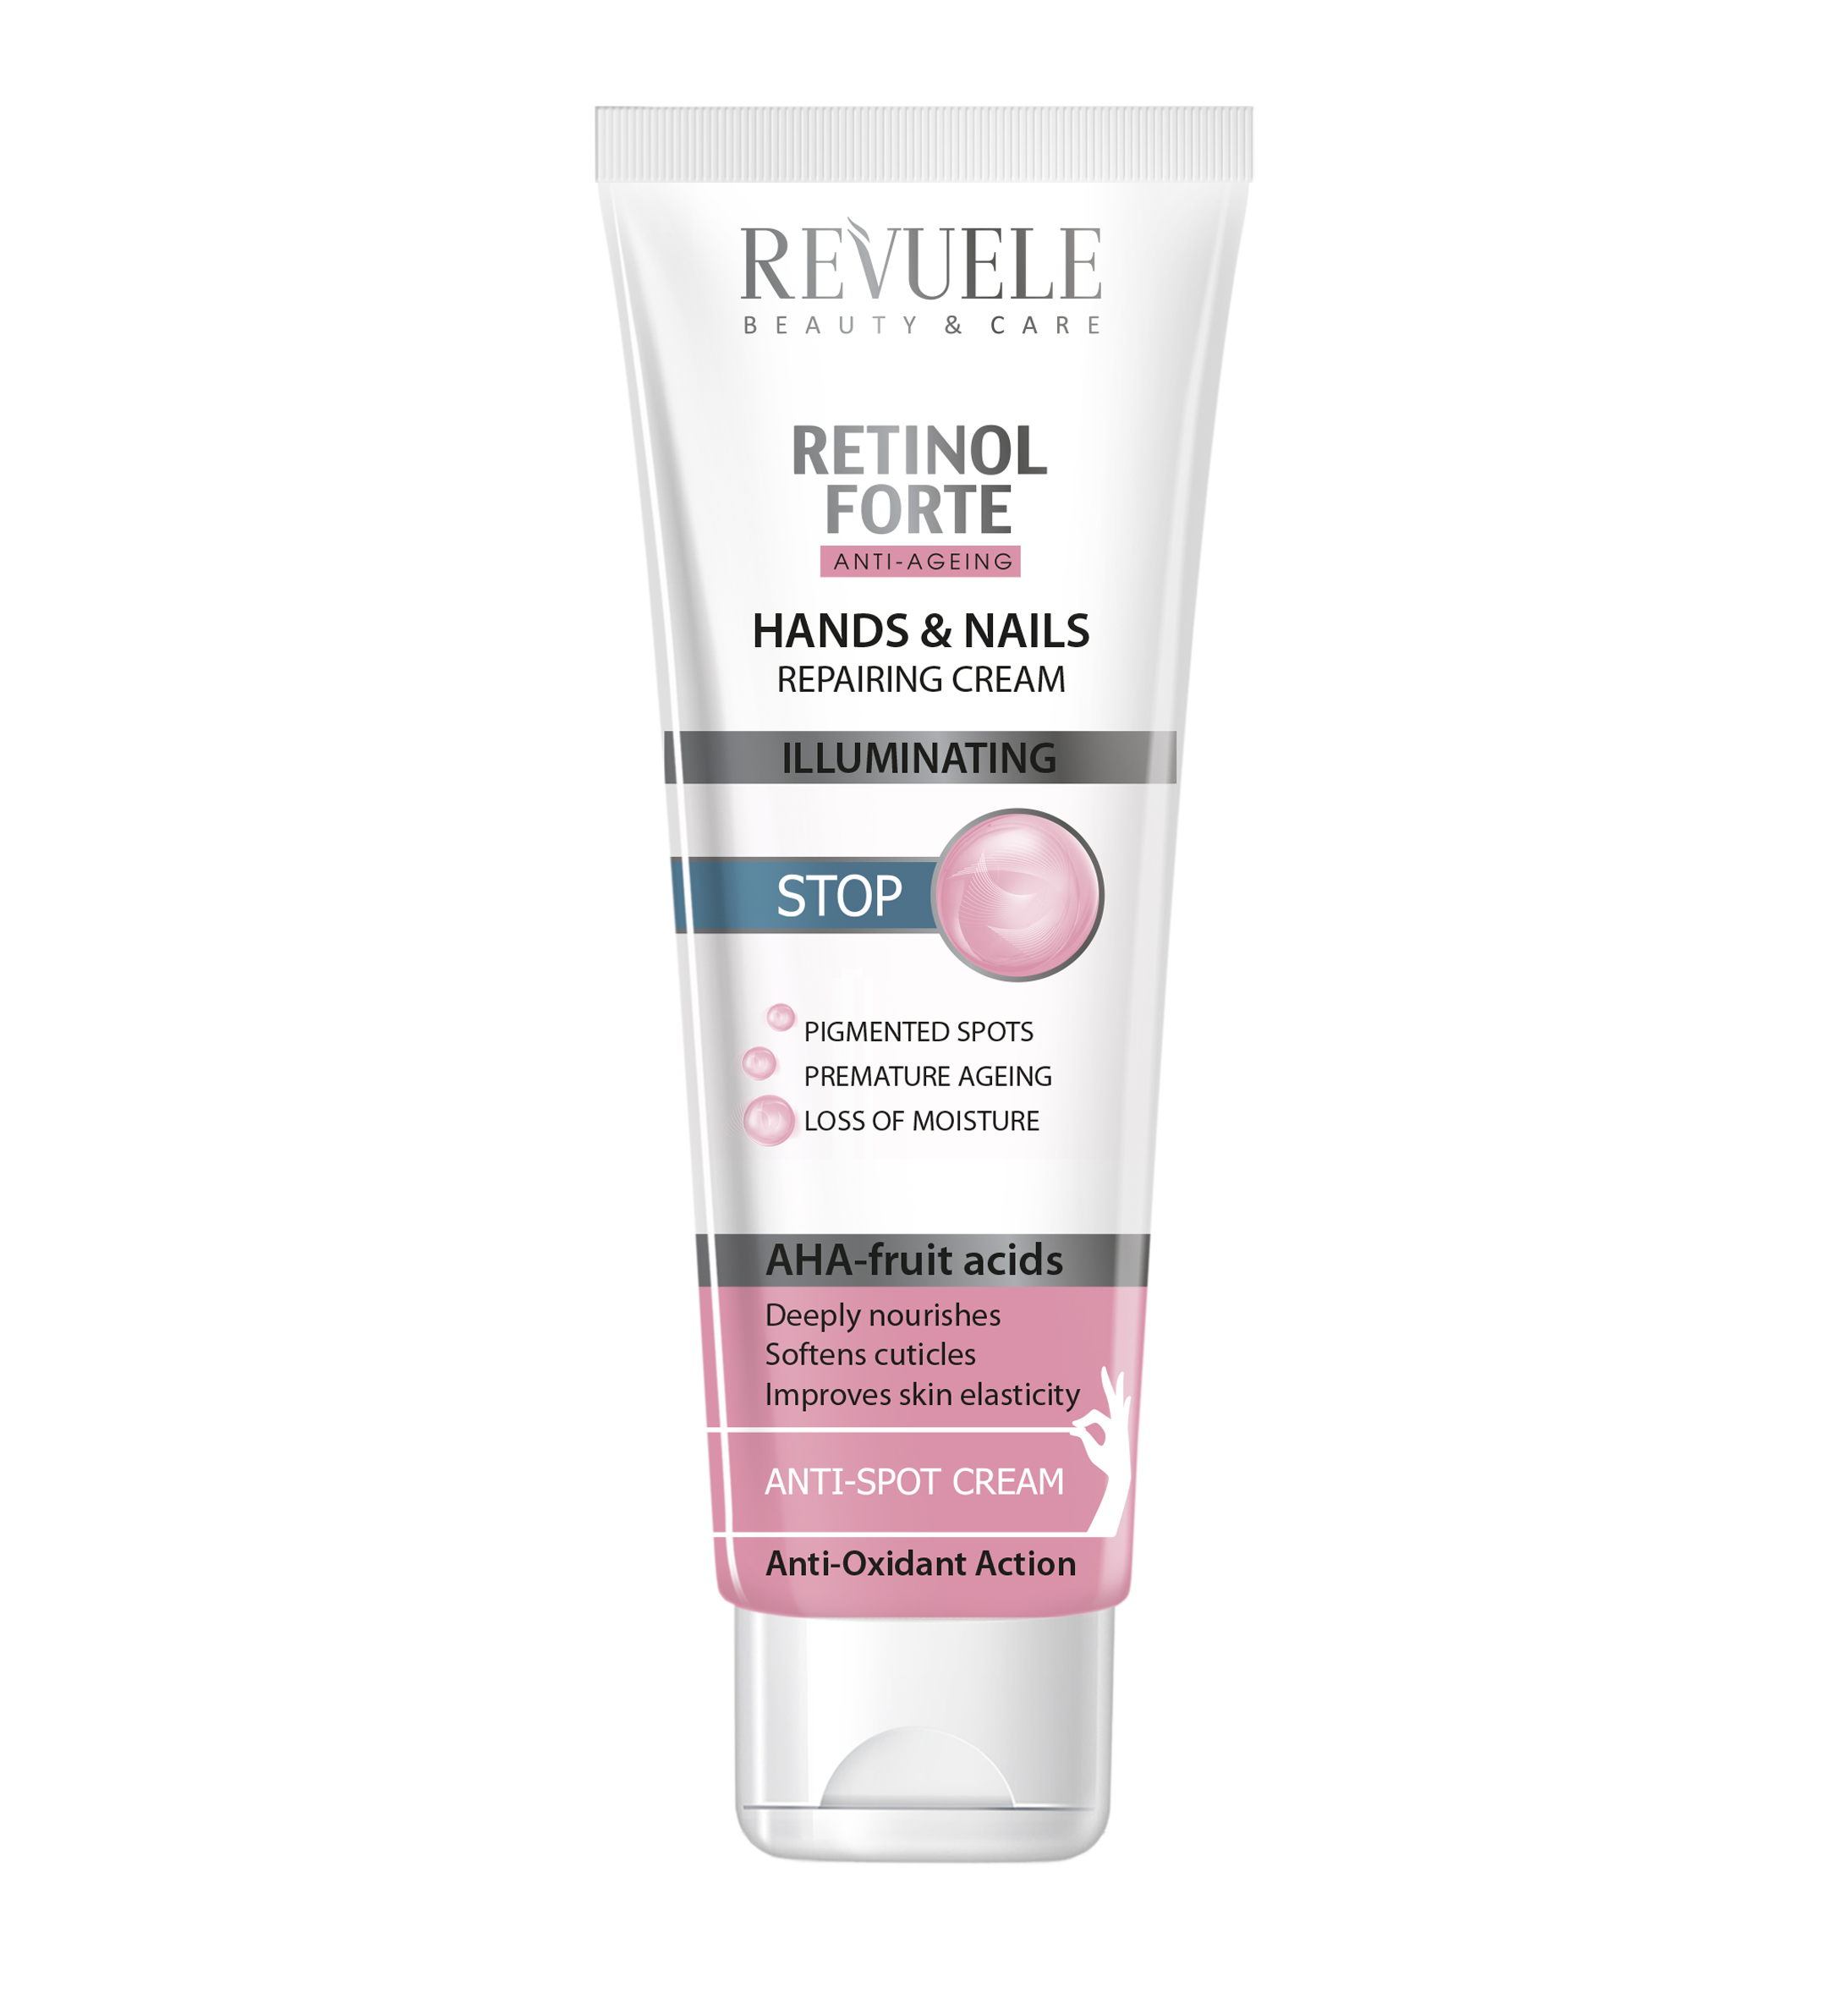 Revuele Retinol forte - Hands & Nails repairing cream